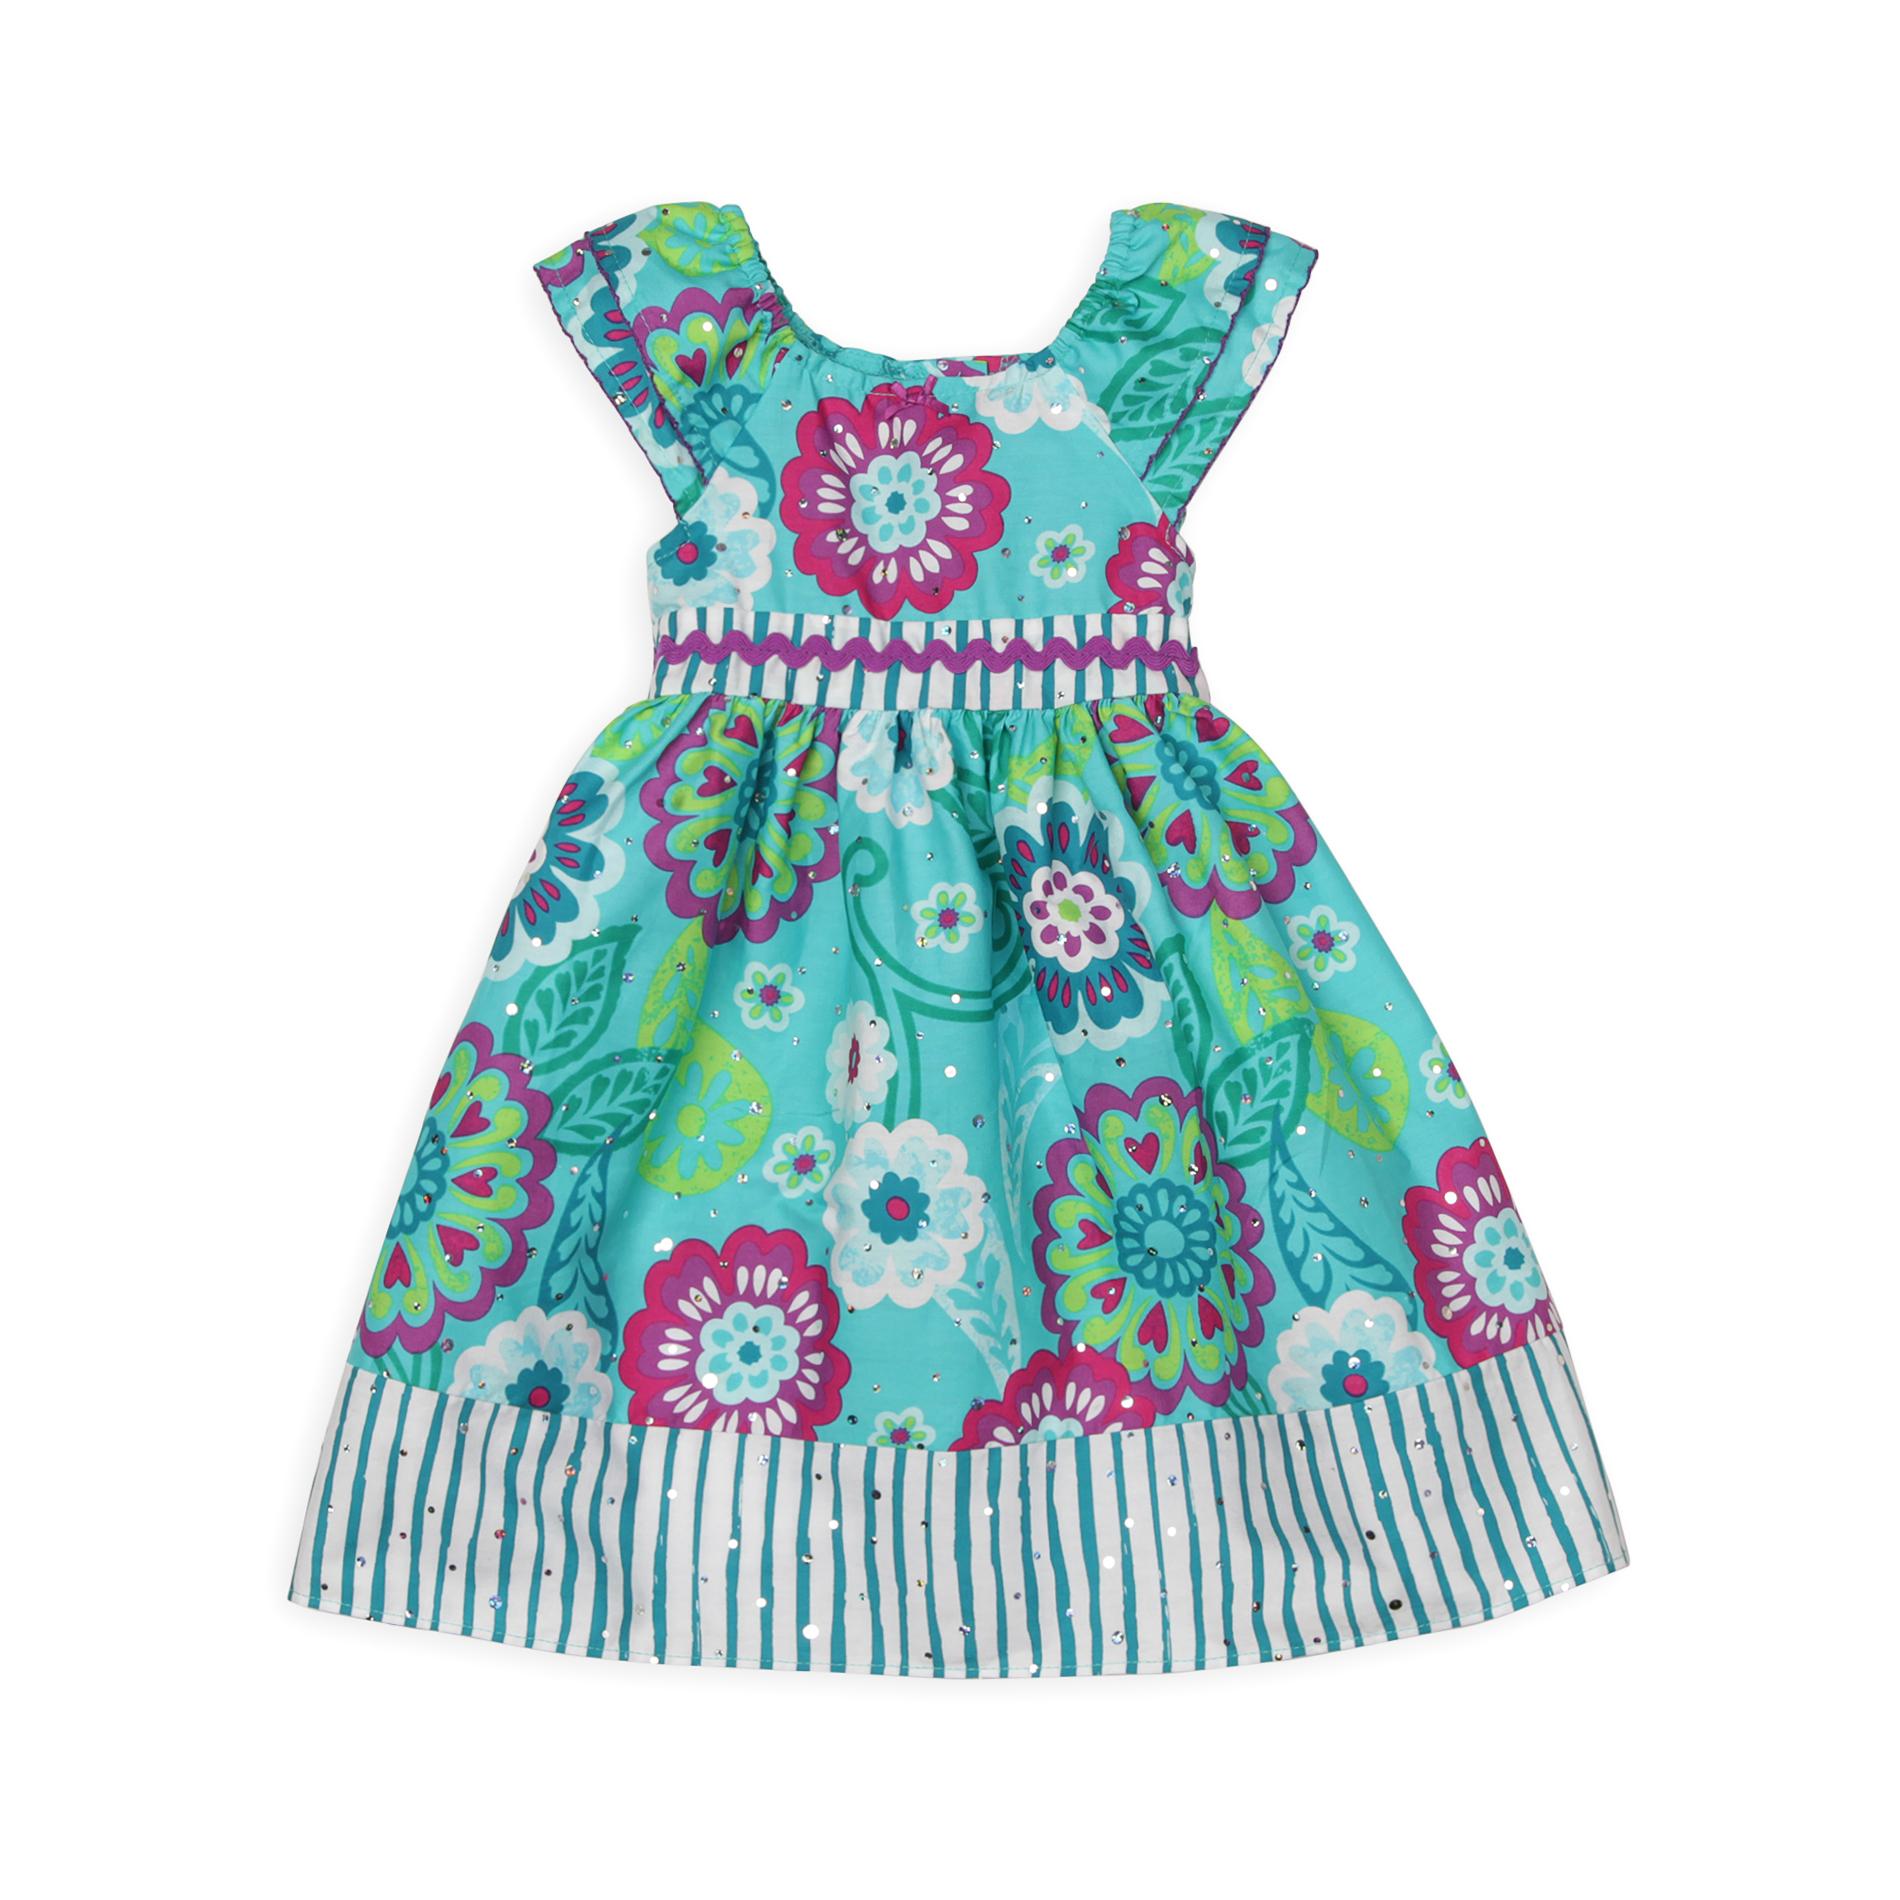 Youngland Infant & Toddler Girl's Dress - Sequin Floral